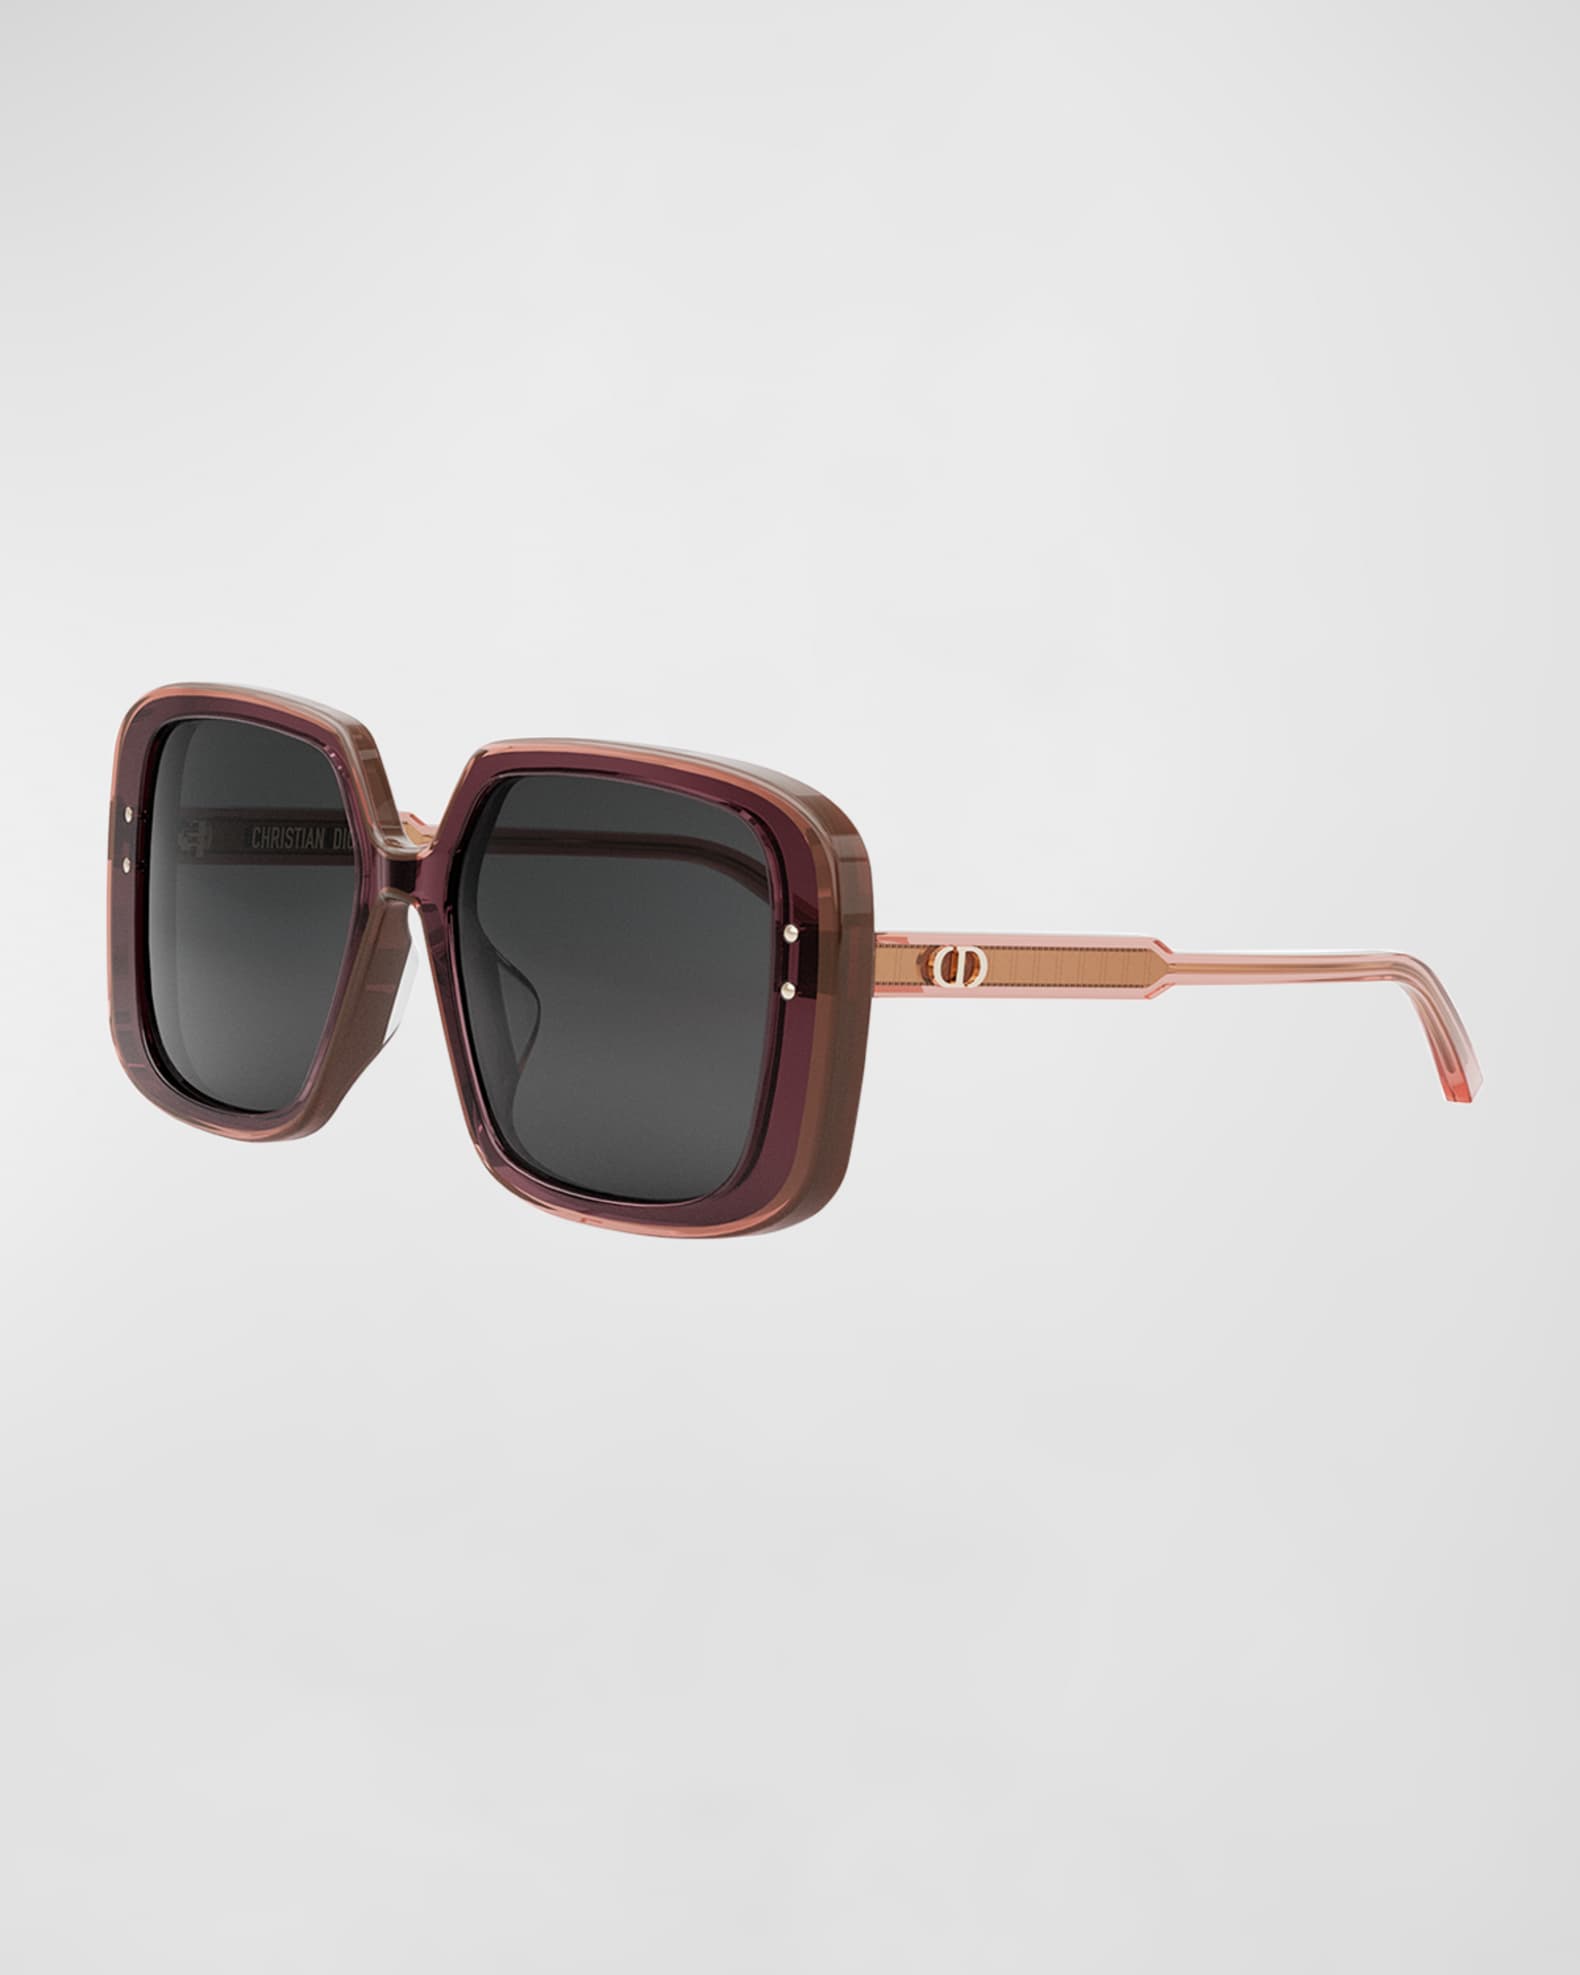 Christian Dior Vintage Interchangeable Ski Goggles Sunglasses